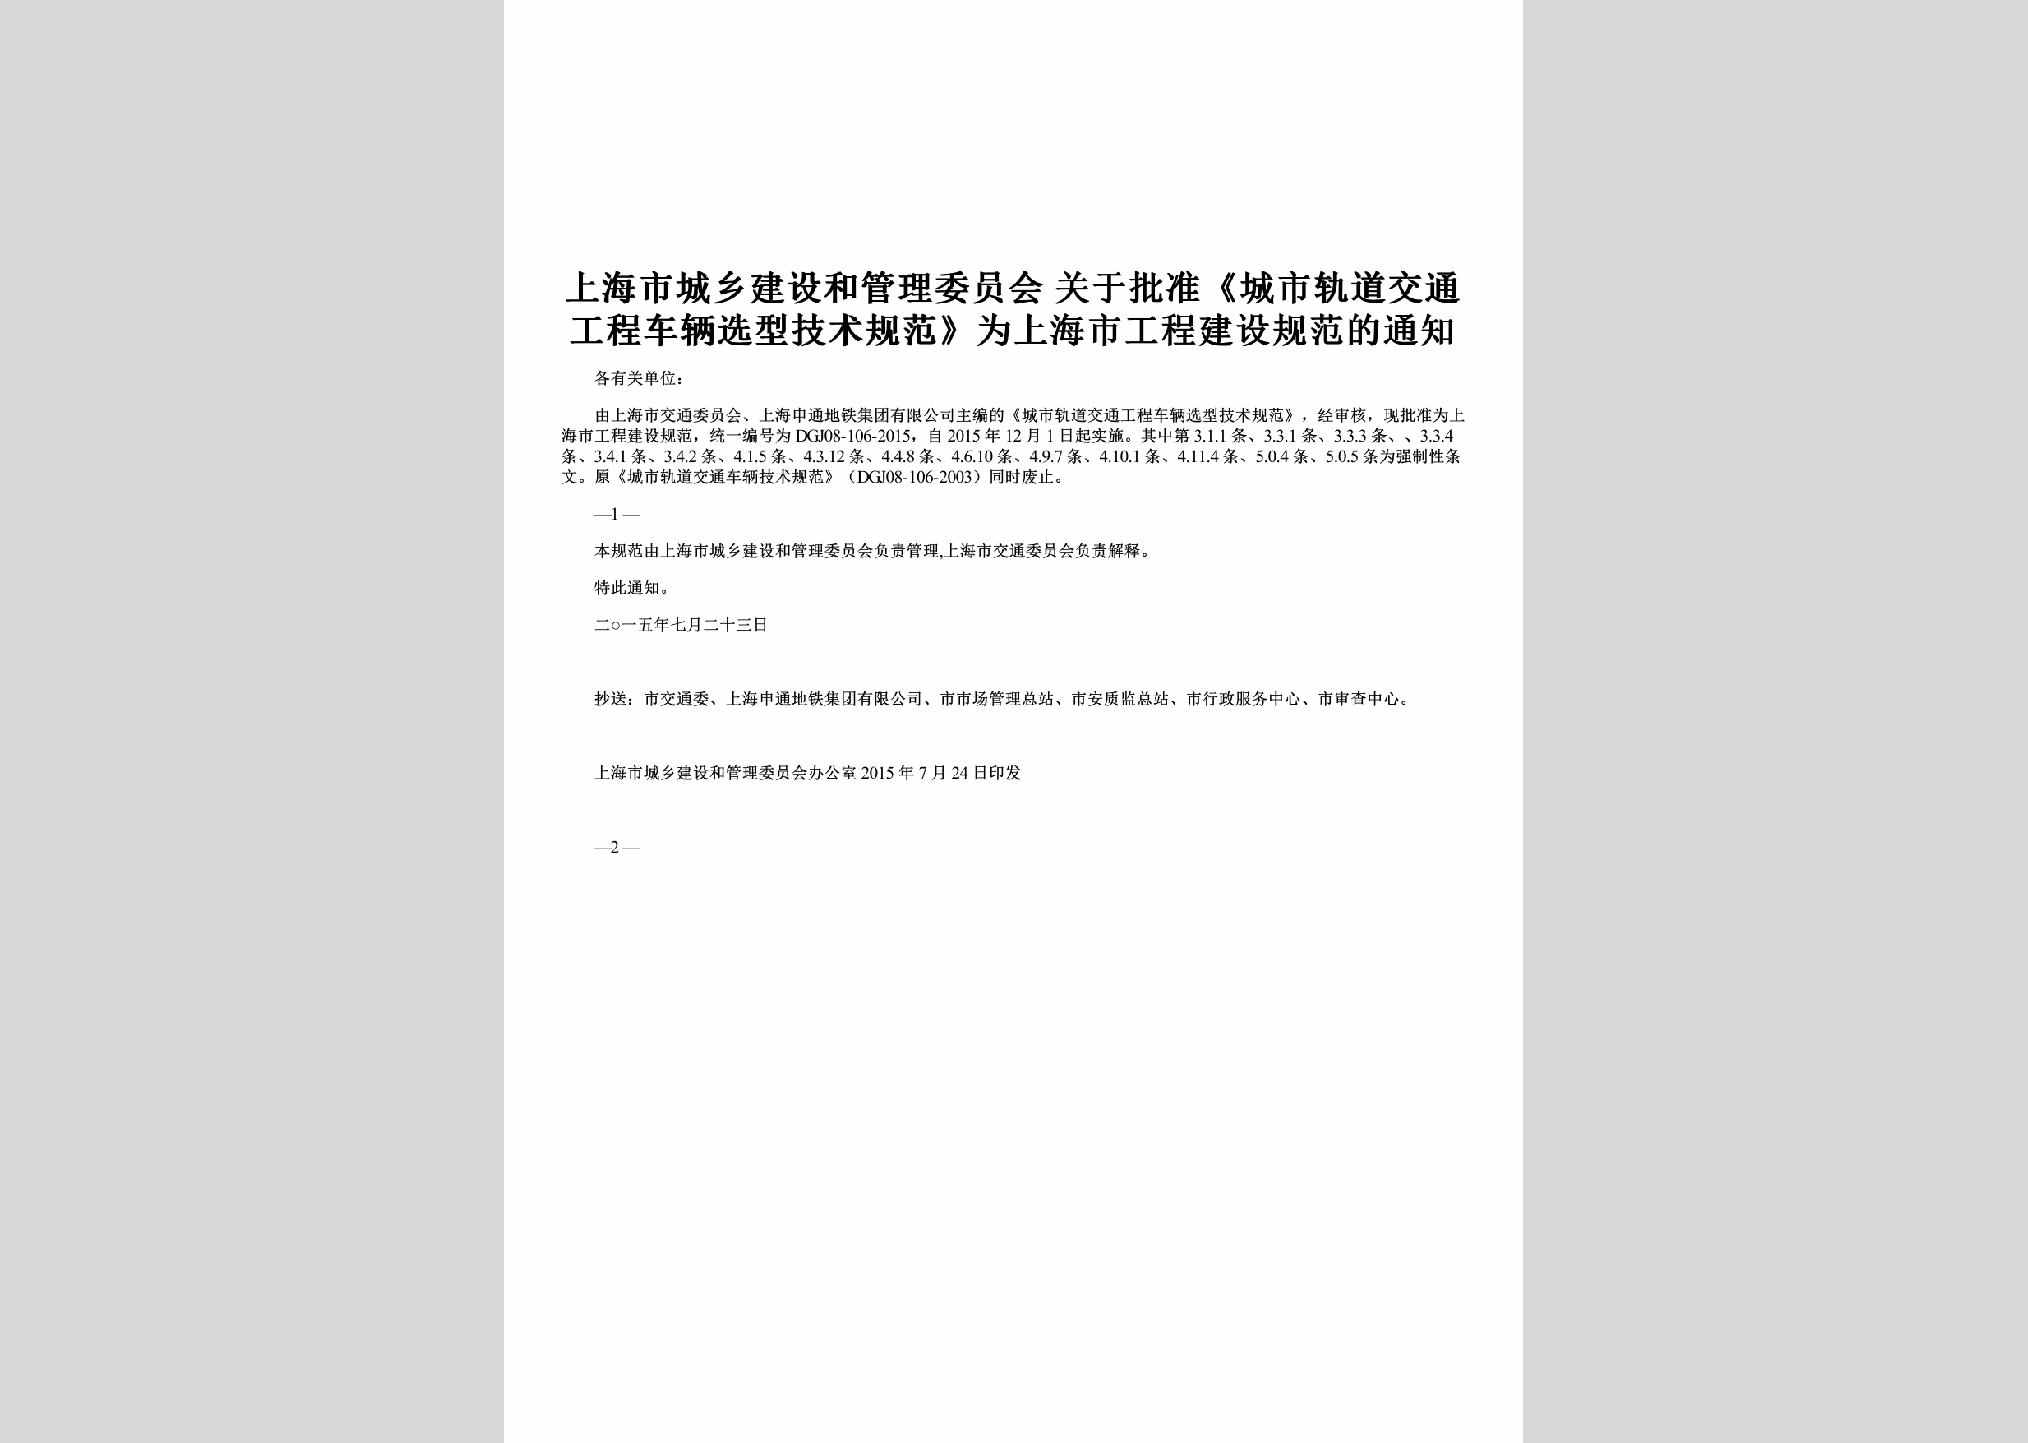 SH-GDJTGFTZ-2015：关于批准《城市轨道交通工程车辆选型技术规范》为上海市工程建设规范的通知